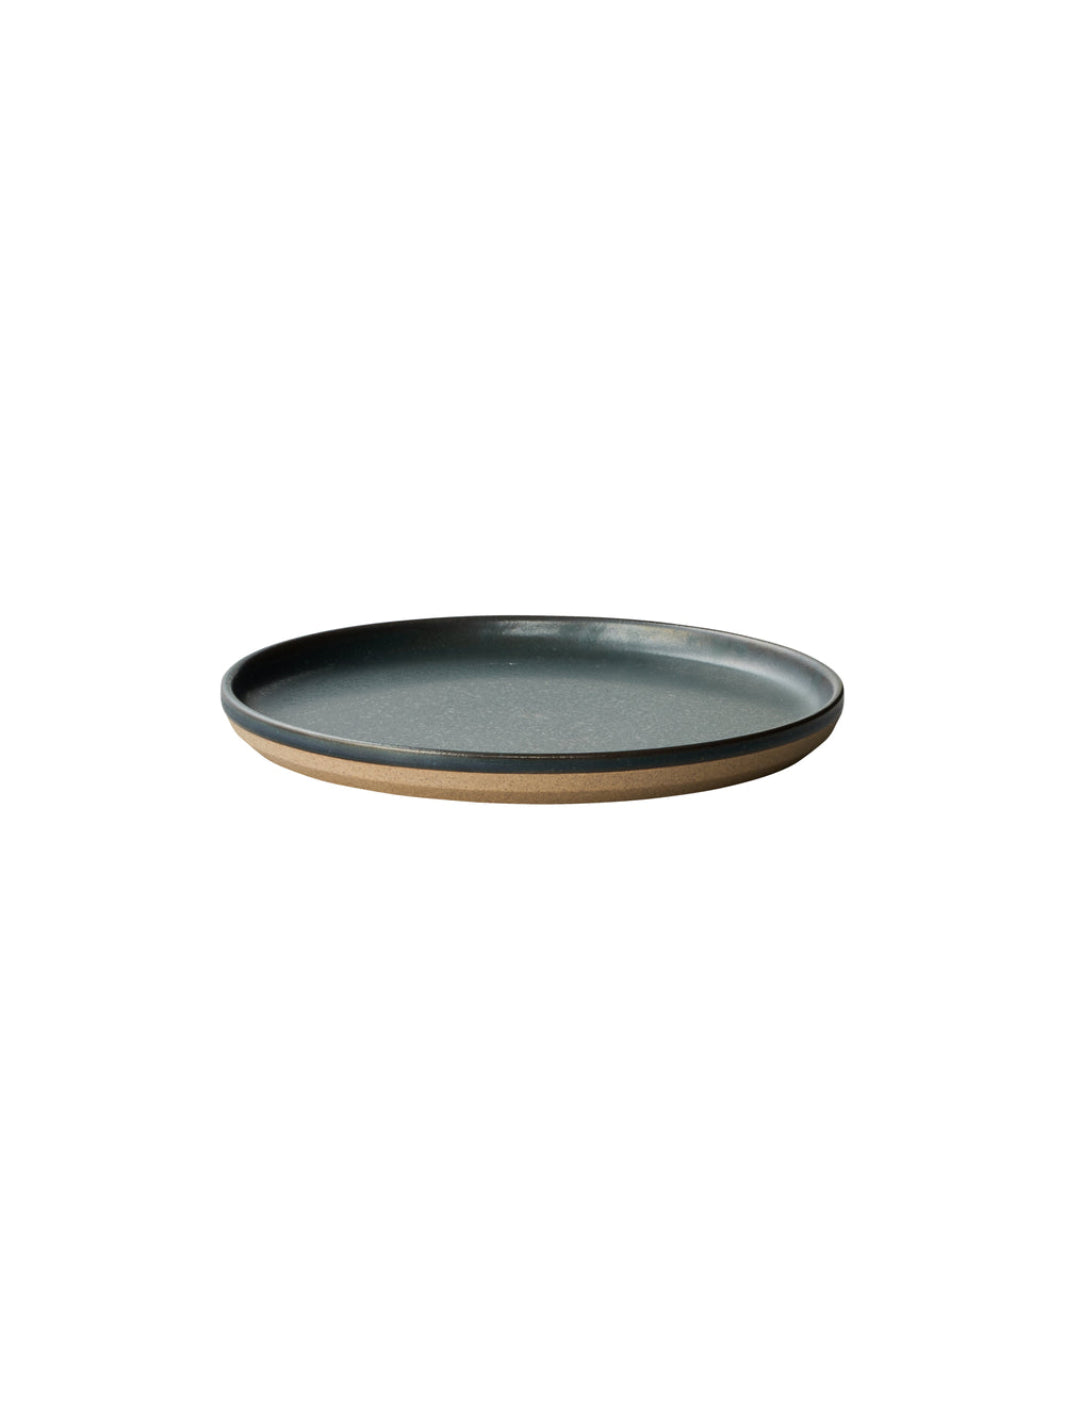 KINTO CERAMIC LAB Plate (200mm/8in)